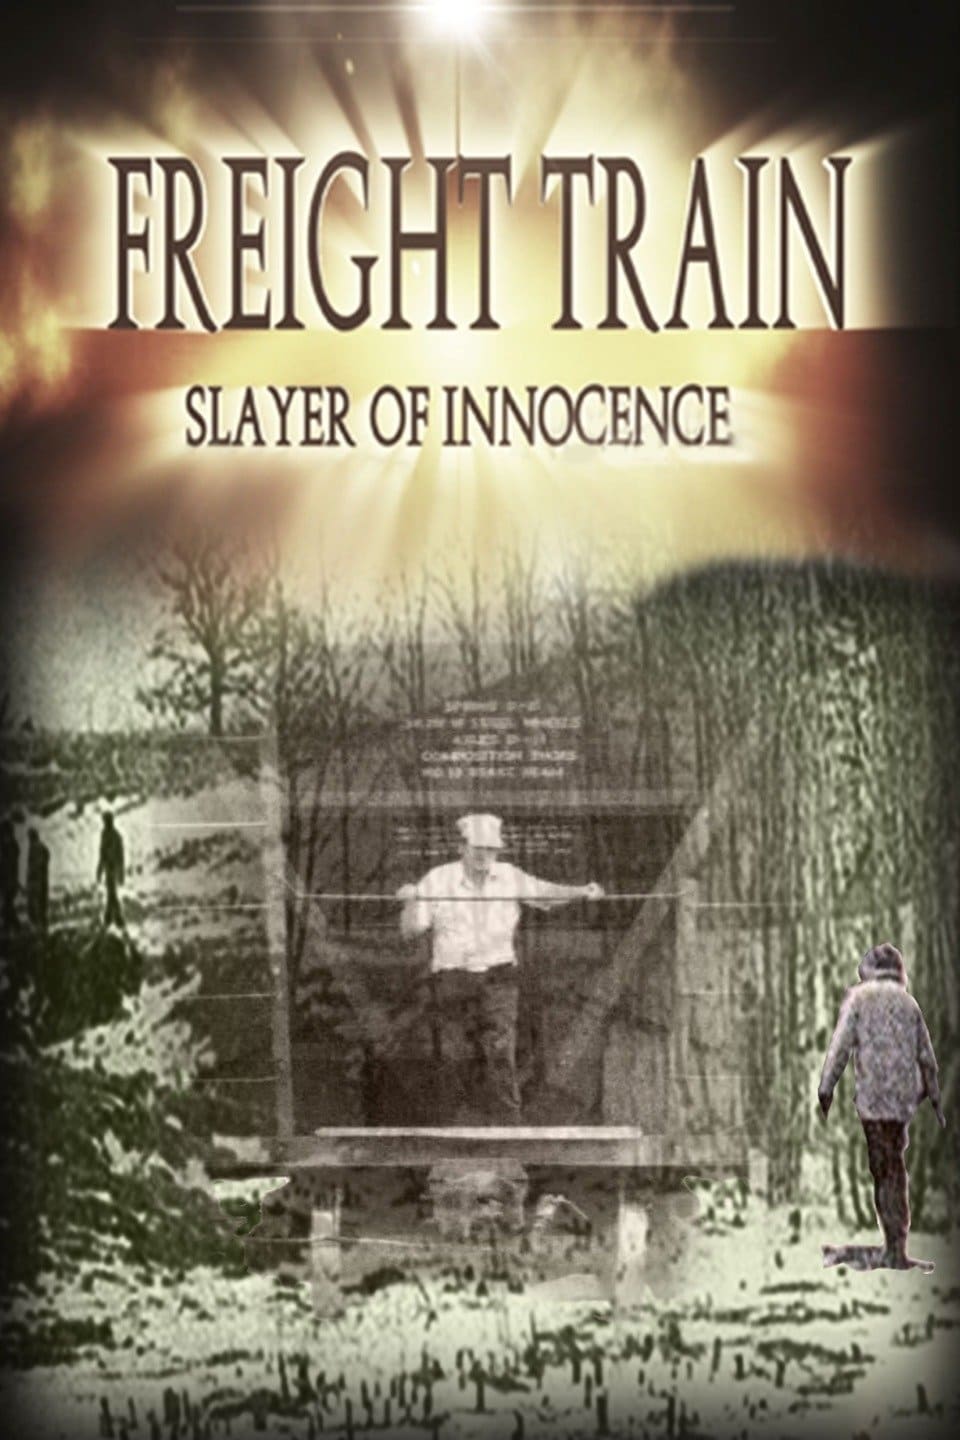 Freight Train: Slayer of Innocence